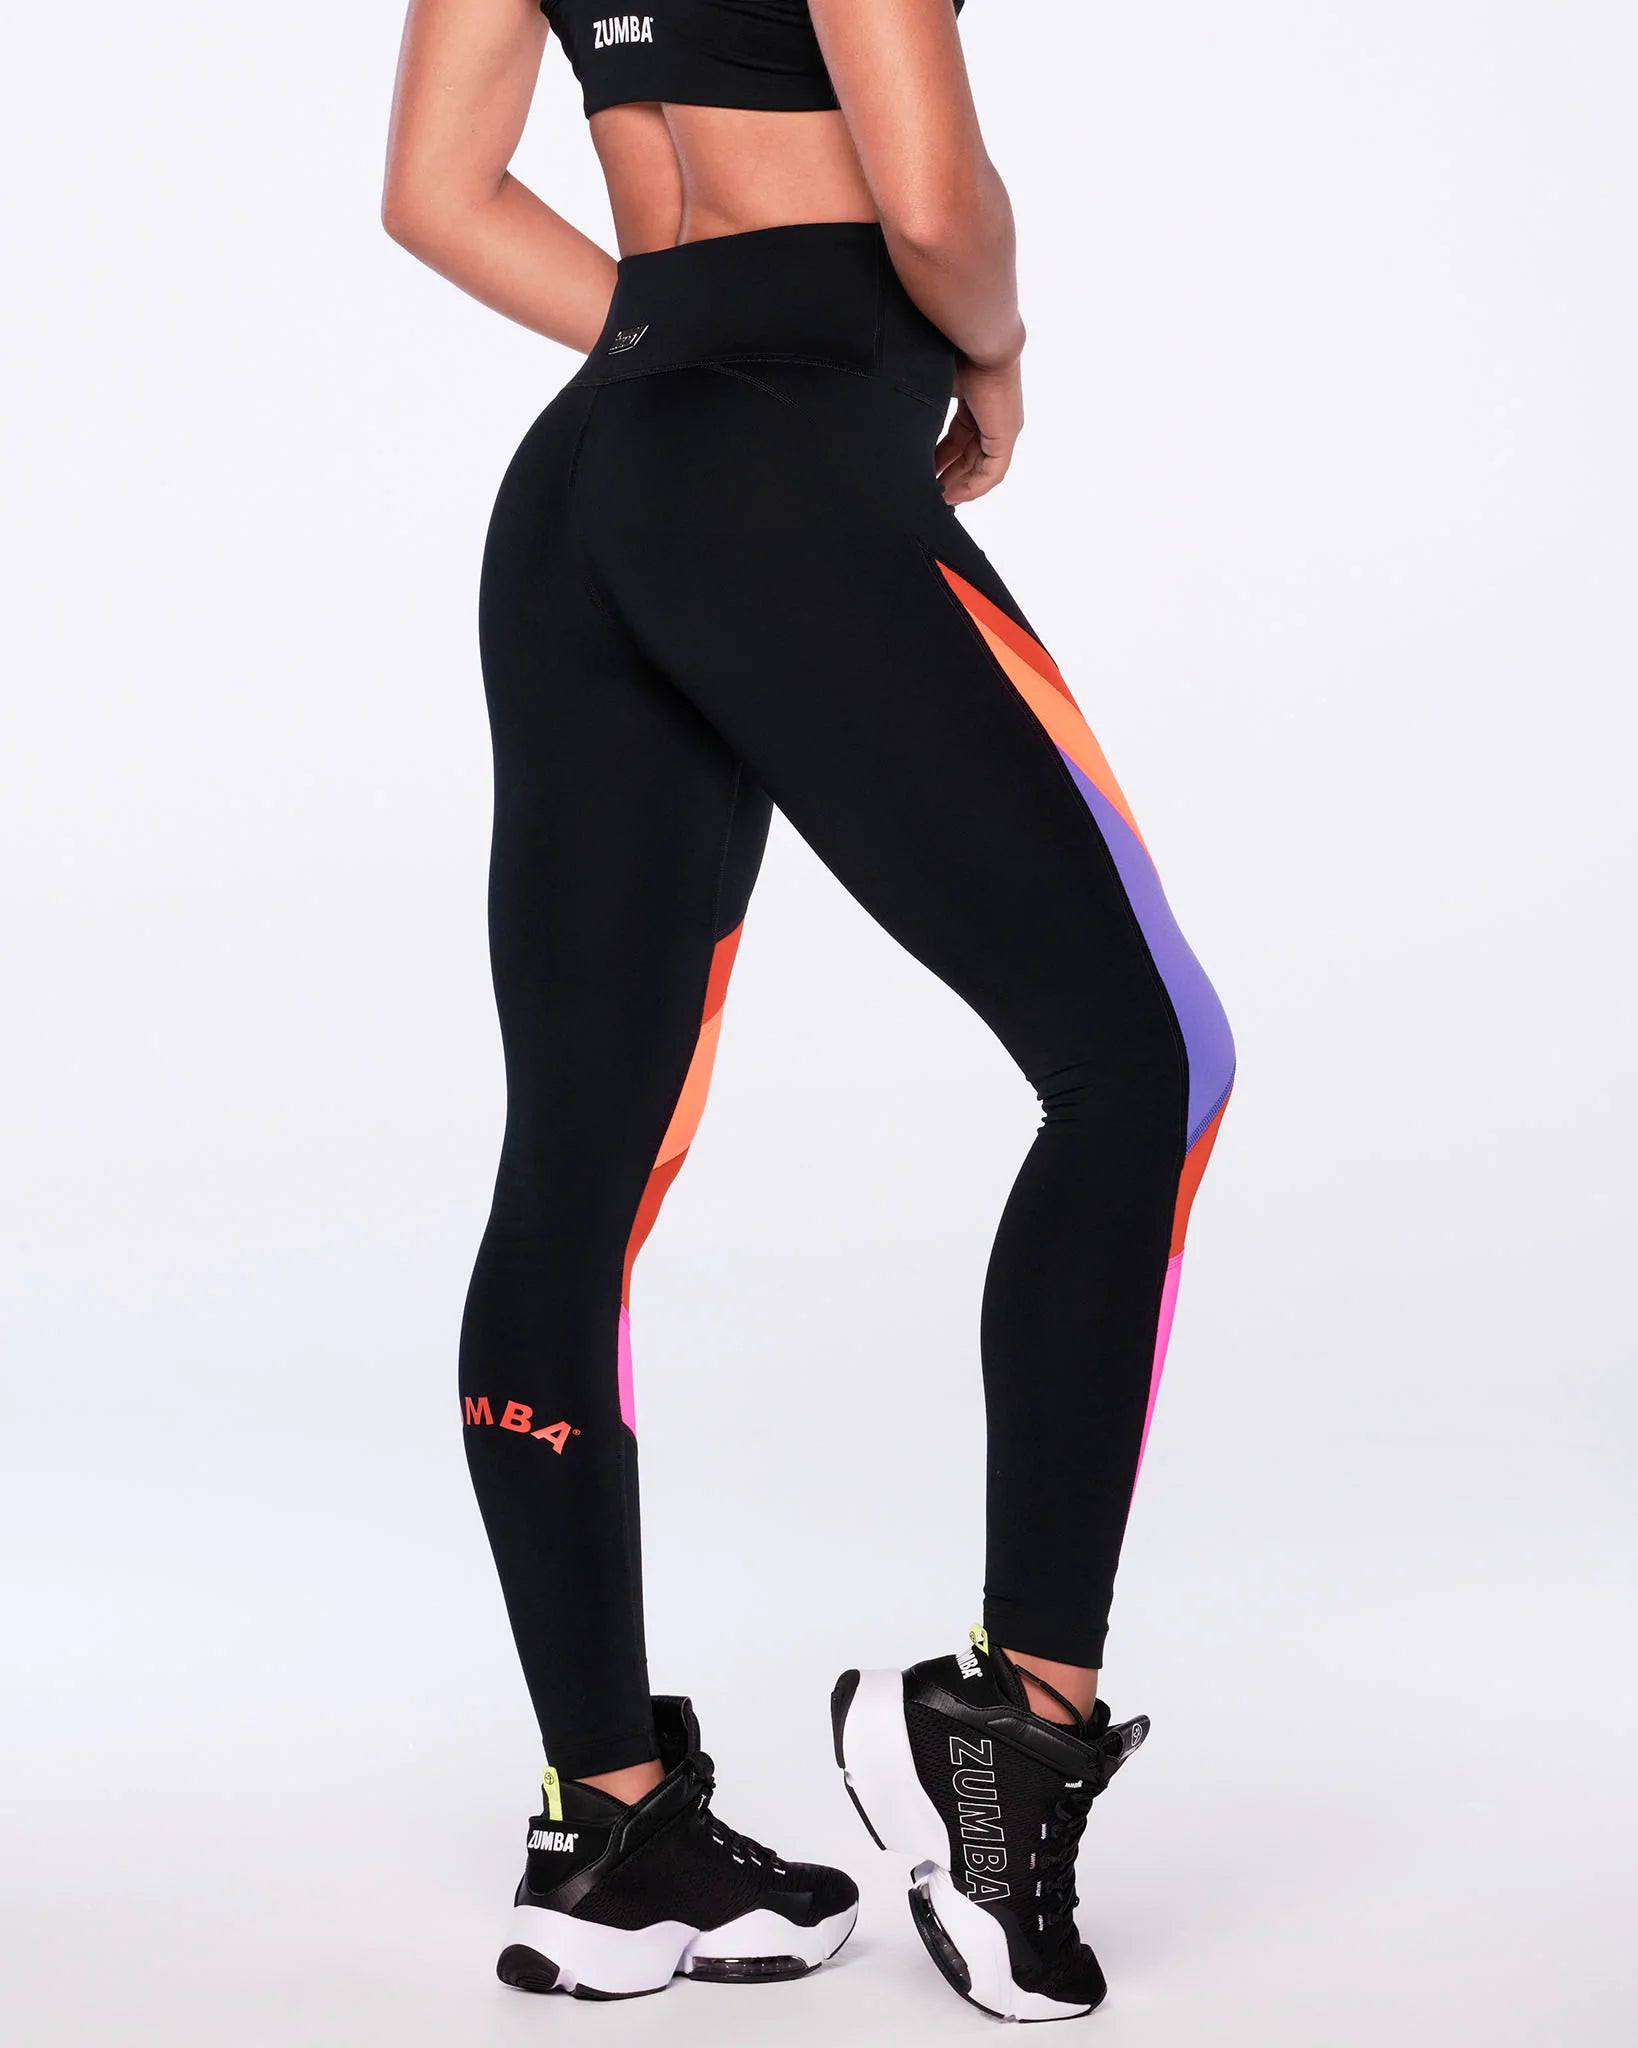 Zelos Leggings Womens Small Black Multicolor Activewear Compression Pants